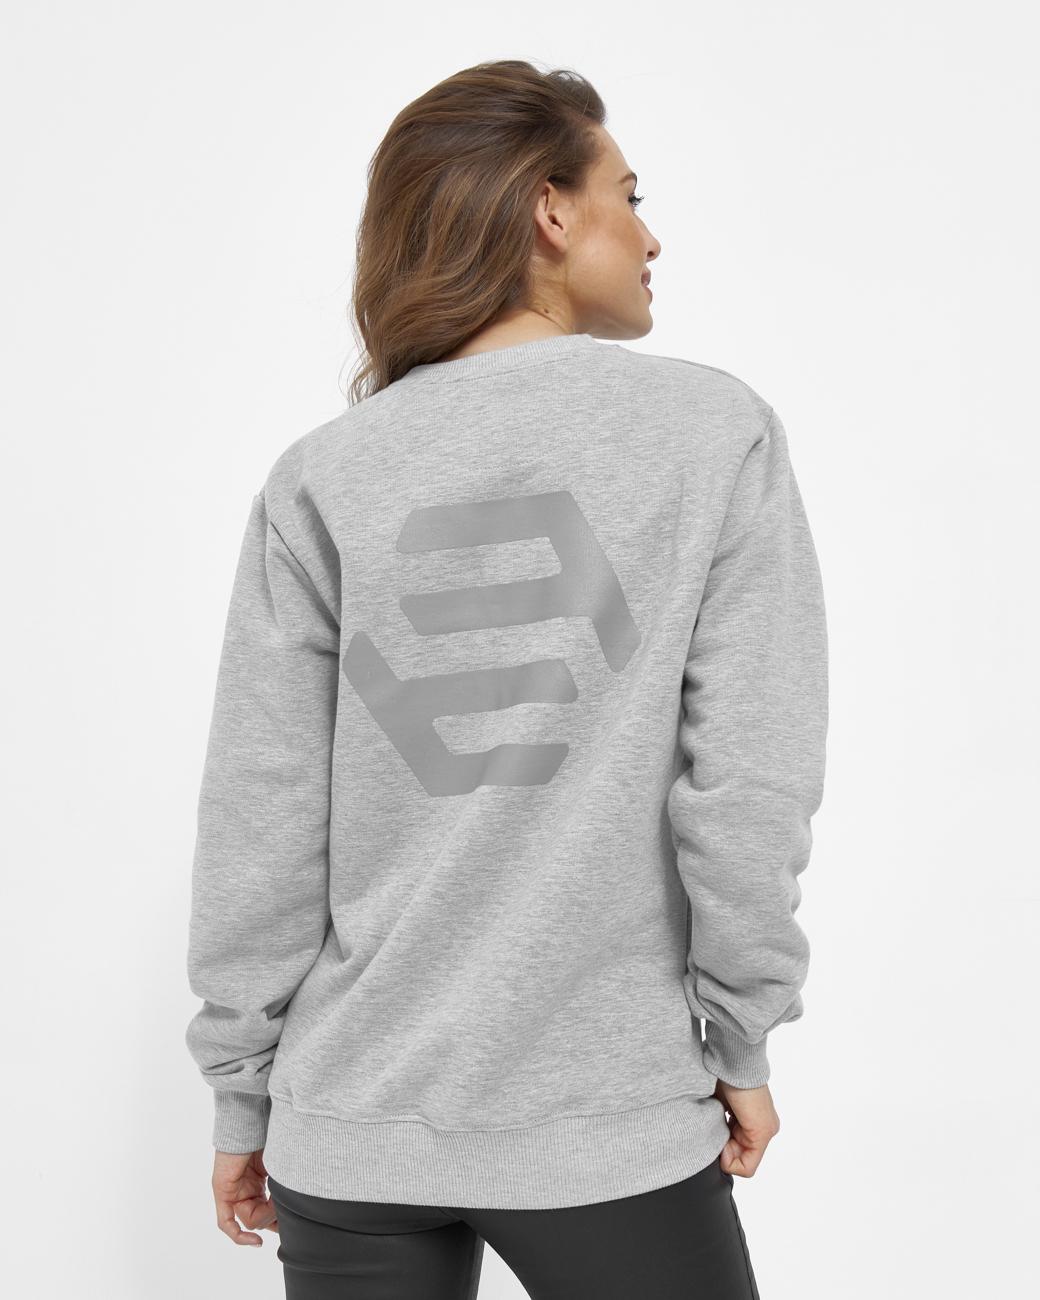 Sweatshirt SOFTFLIX grey XXL